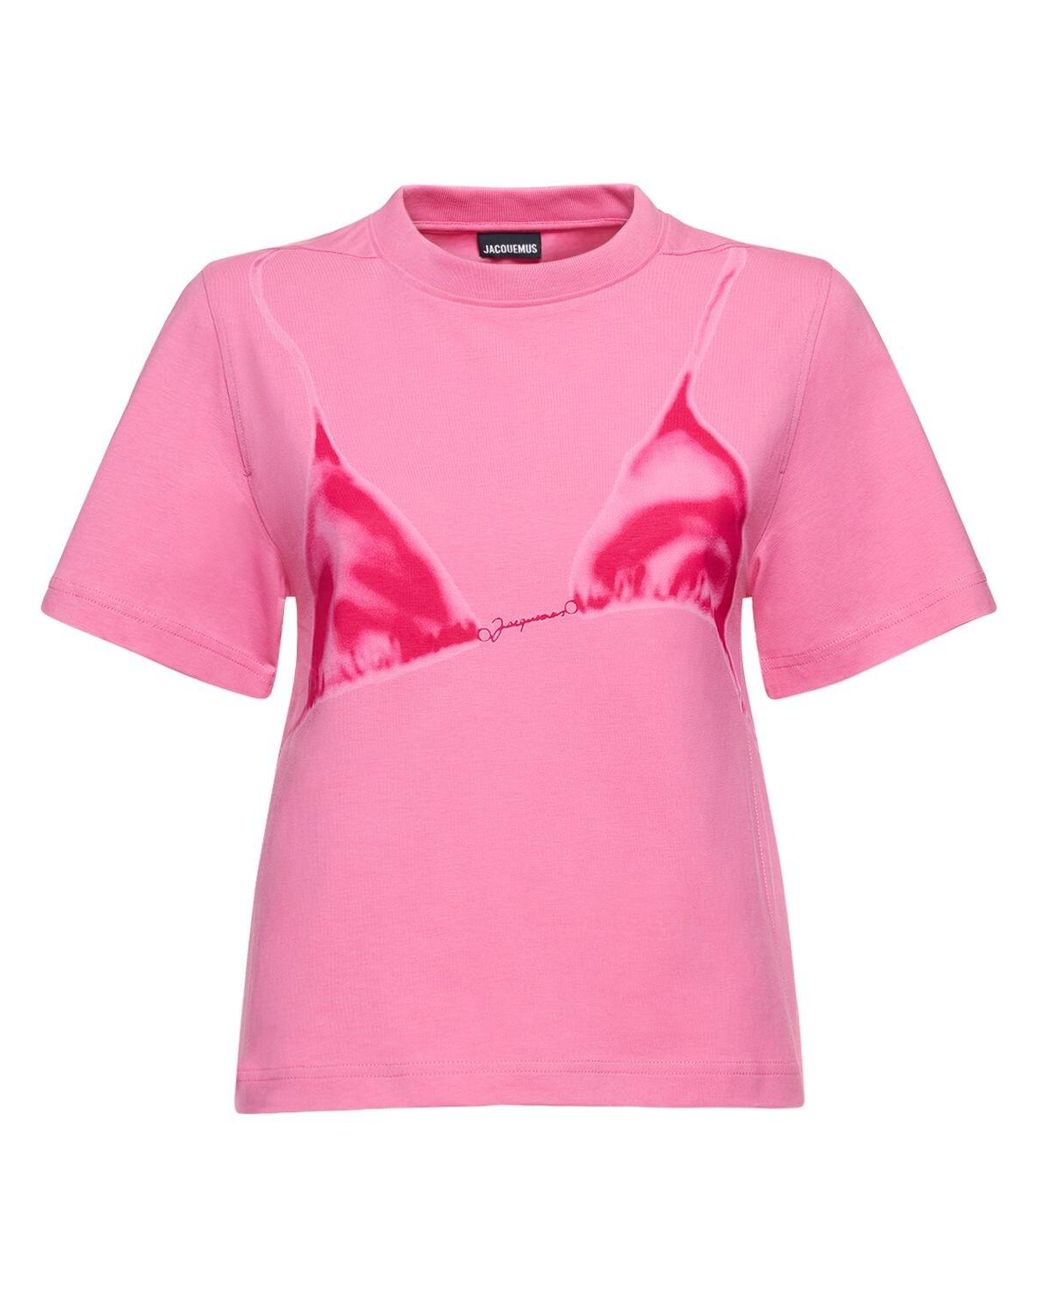 Jacquemus Le Tshirt Bikini Printed T-shirt in Pink | Lyst Australia